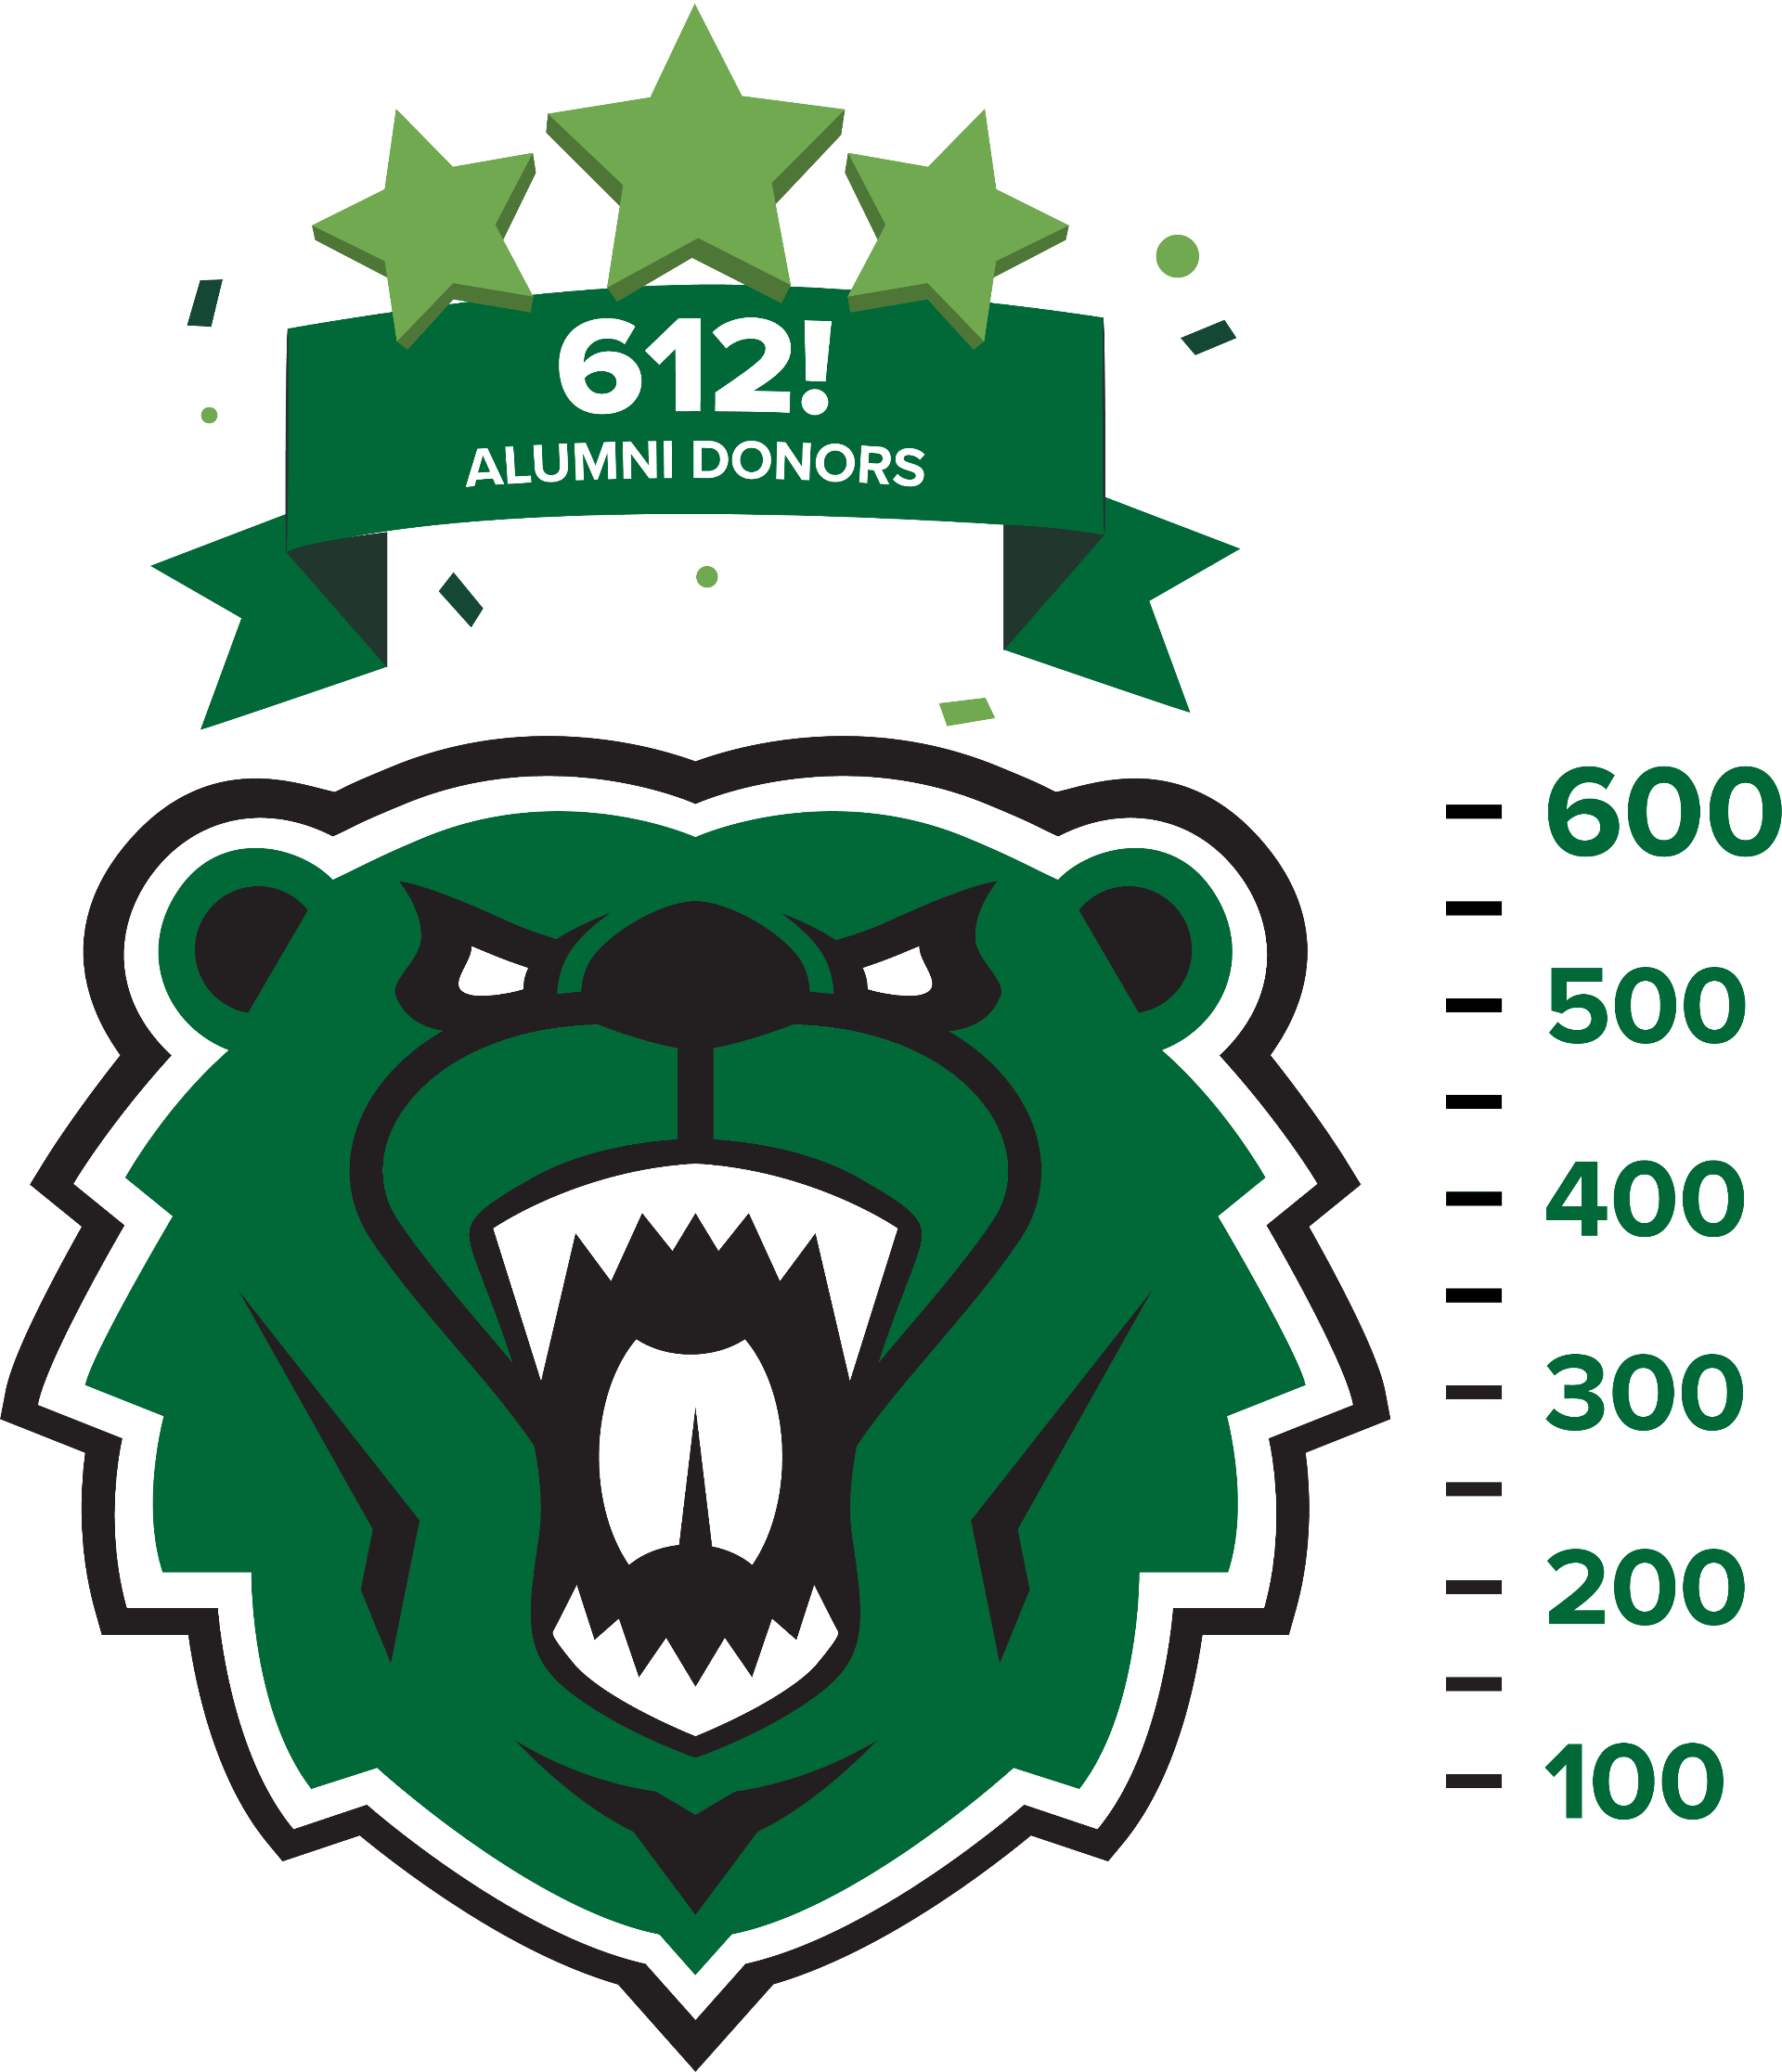 612 Alumni Donors